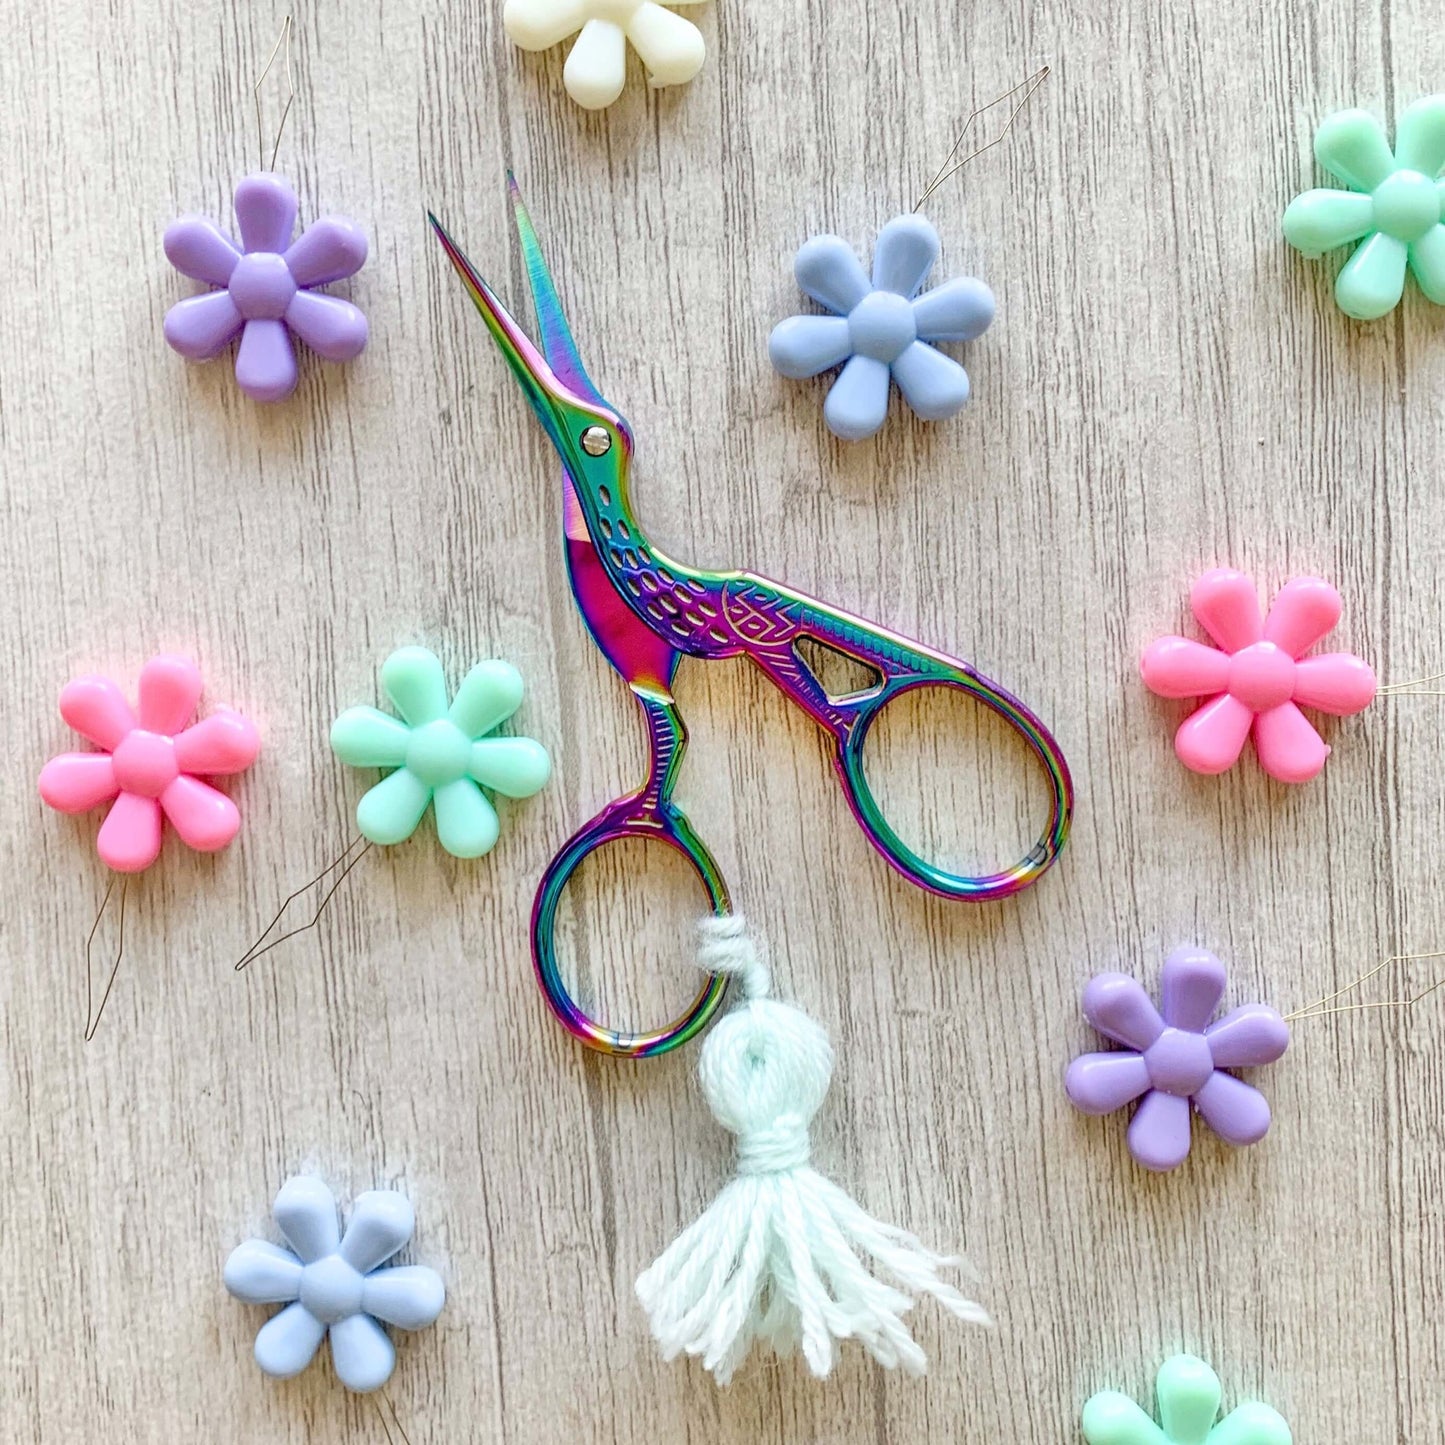 Iridescent bird embroidery scissors with a blue tassel